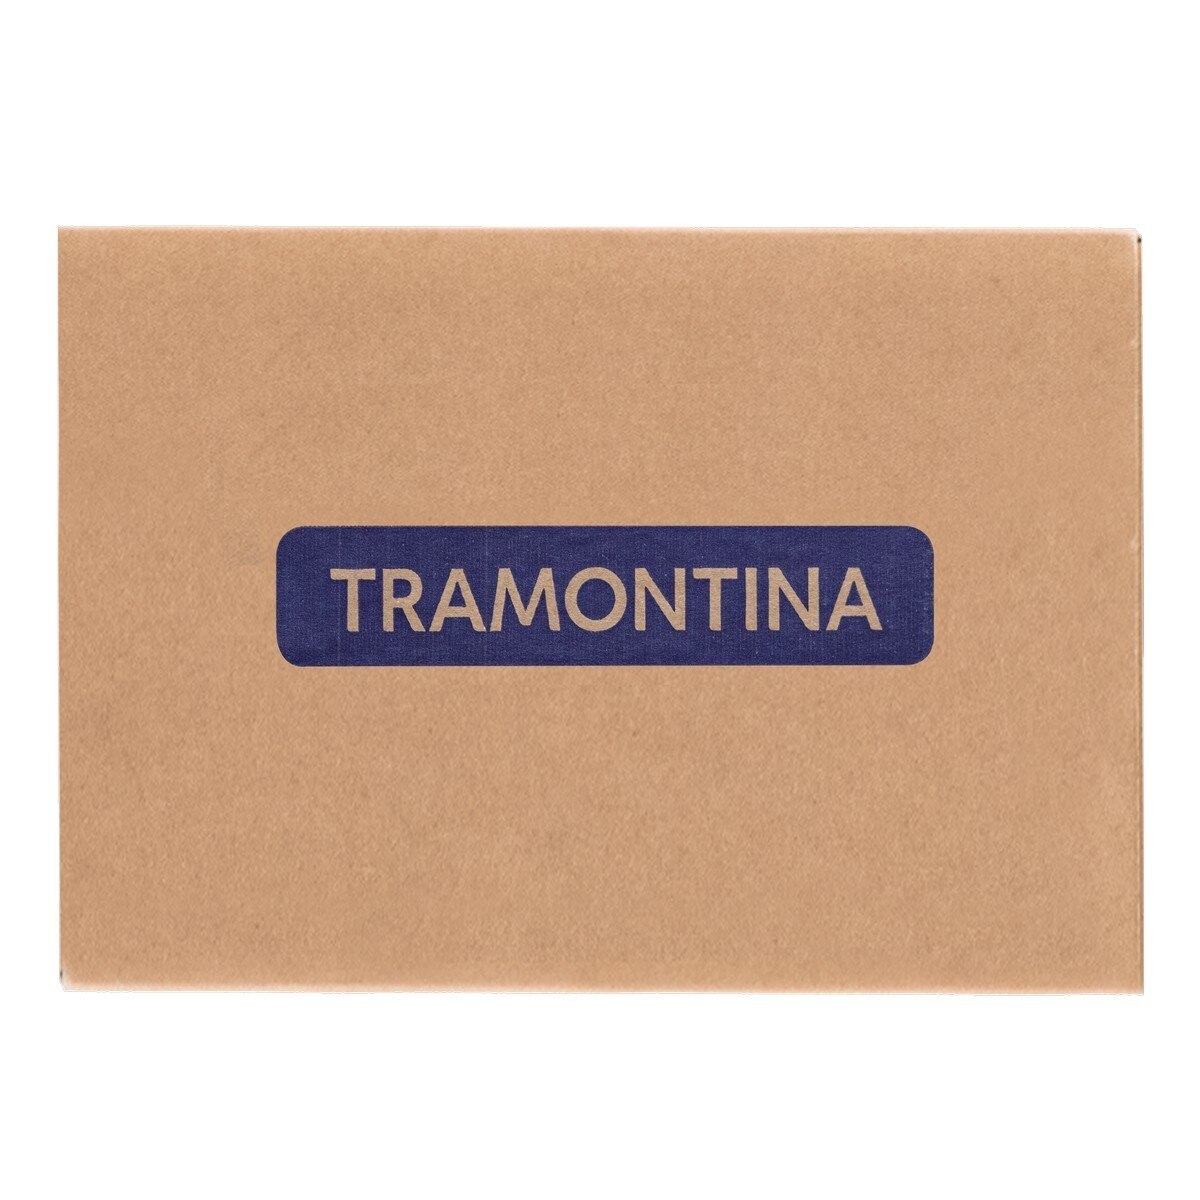 Tramontina 不鏽鋼餐叉 600件組